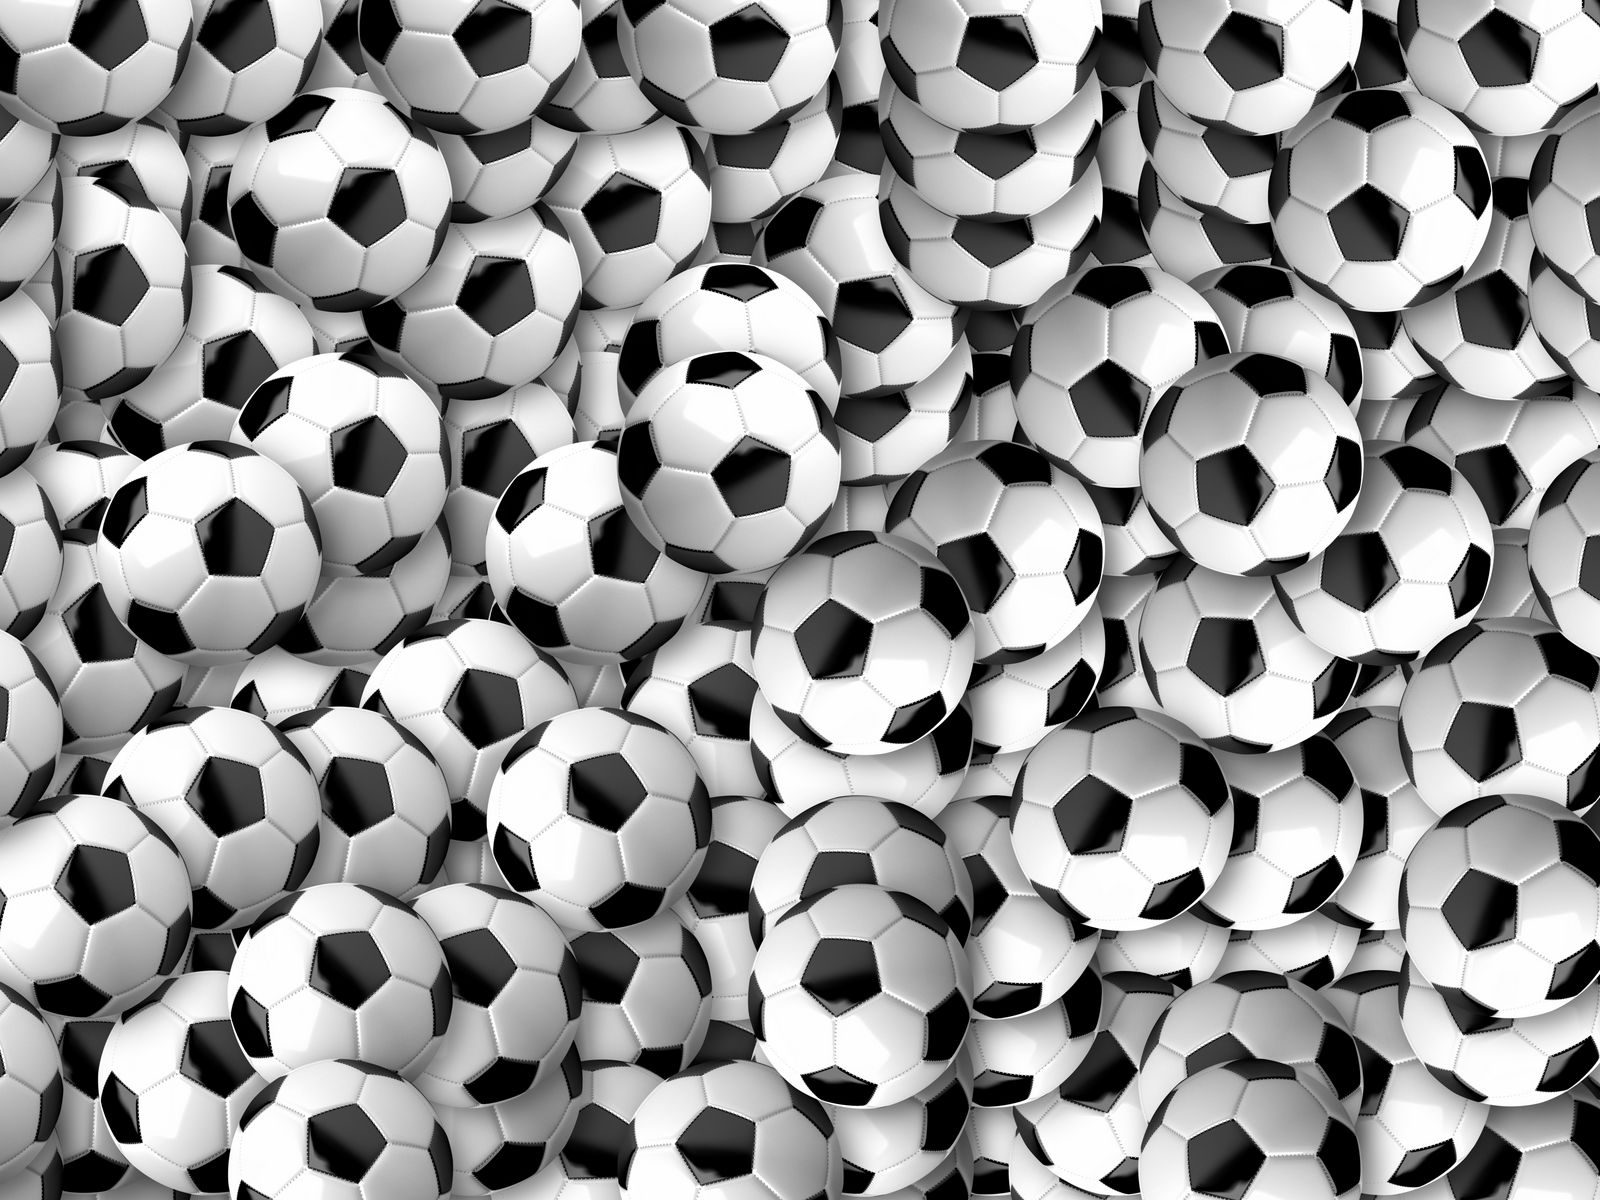 Download wallpaper 1600x1200 soccer balls, football, texture, many ...